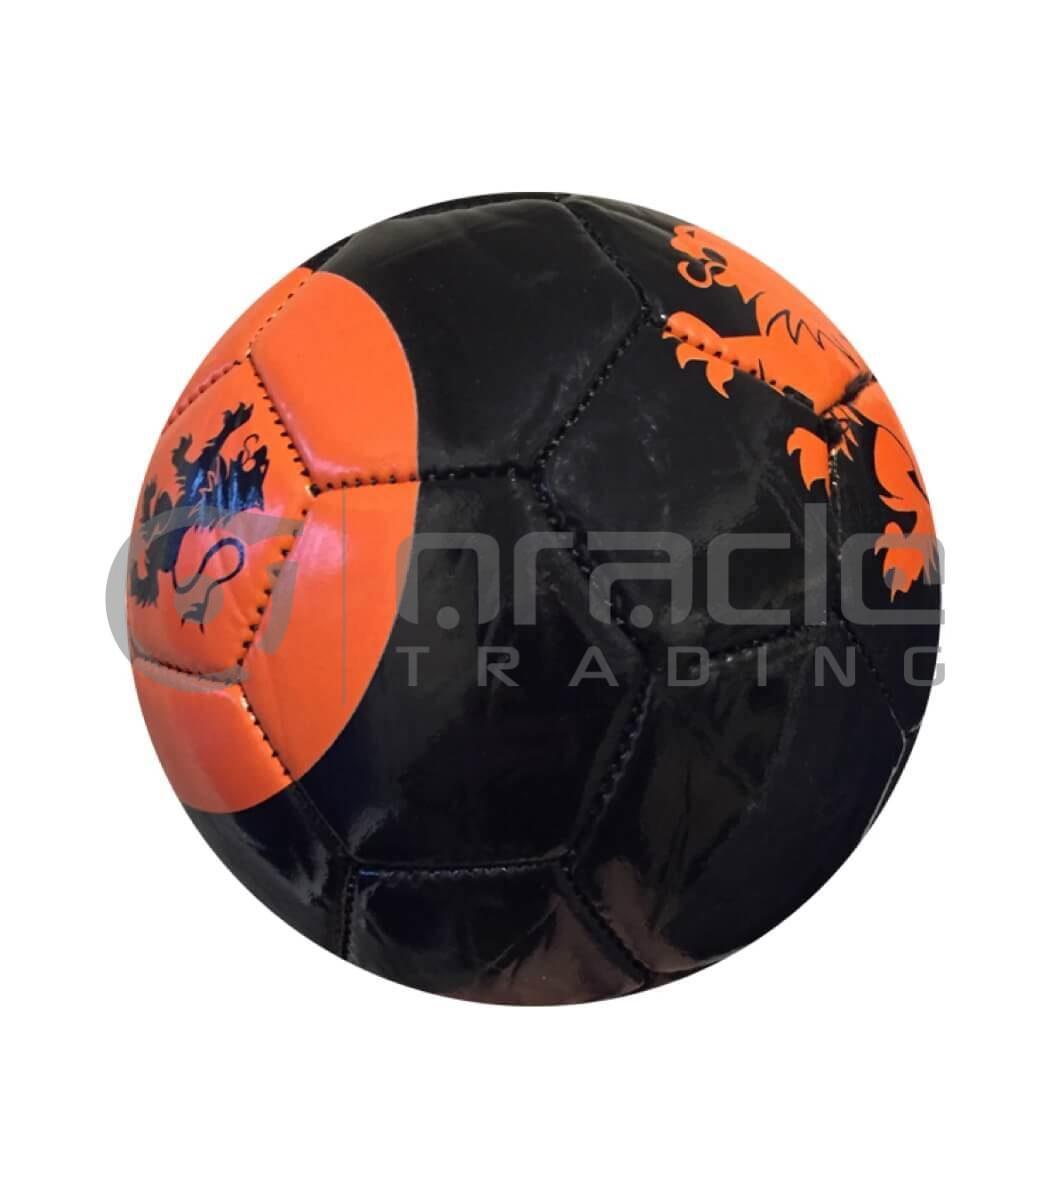 Holland Small Soccer Ball - Black